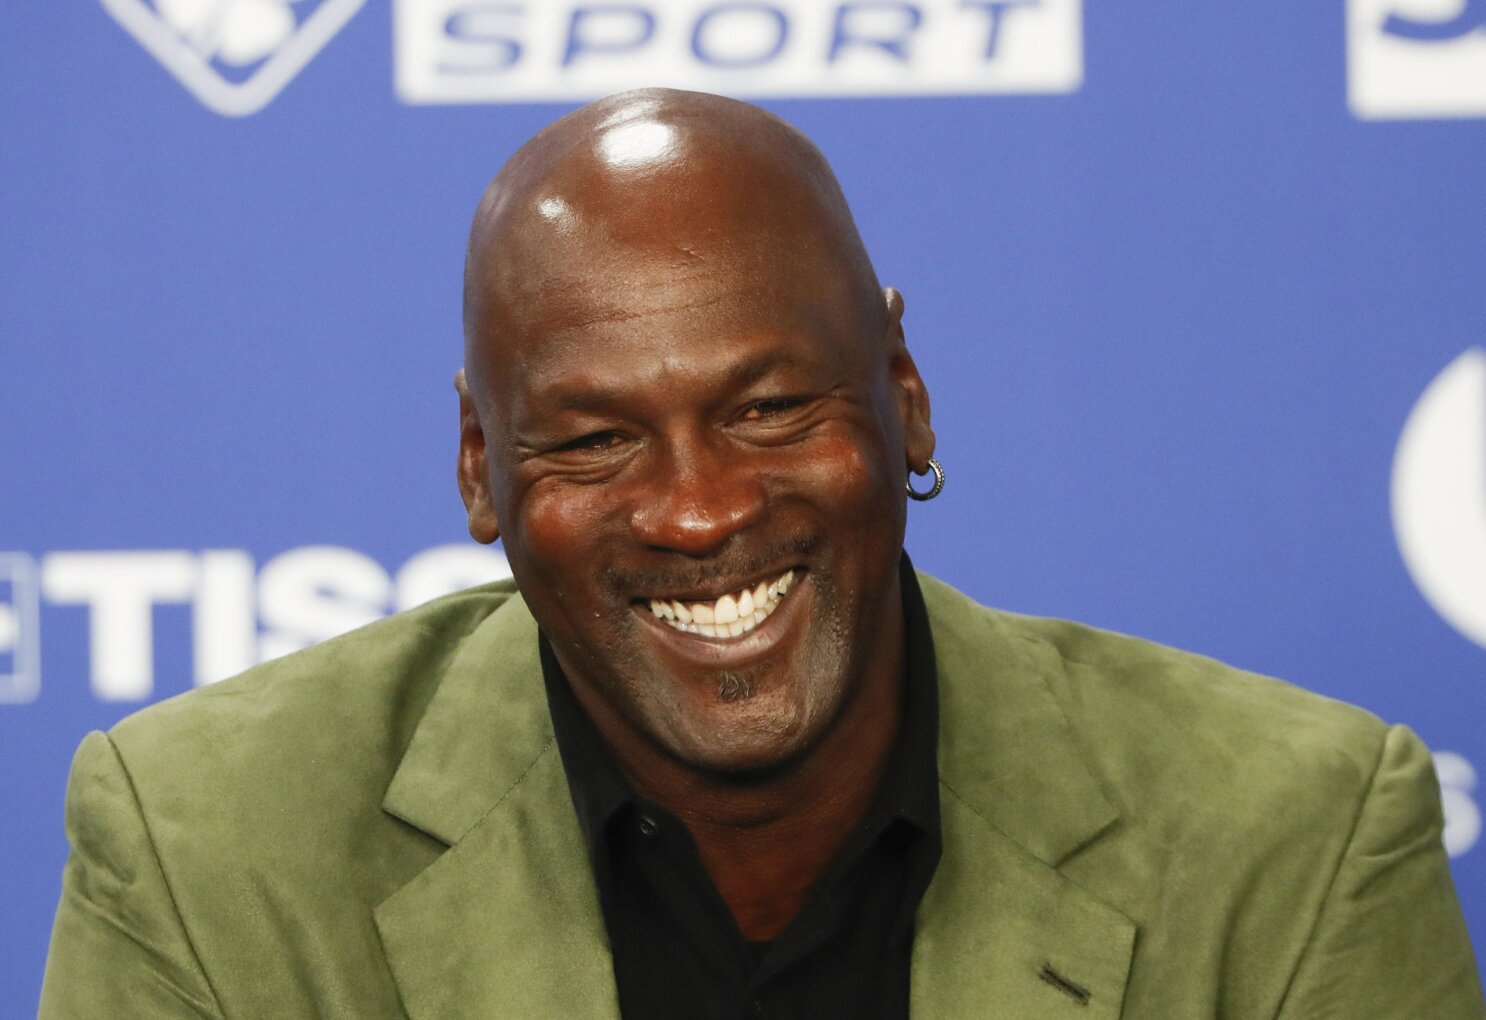 Micheal Jordan will present Kobe Bryant into 2020 Hall of Fame